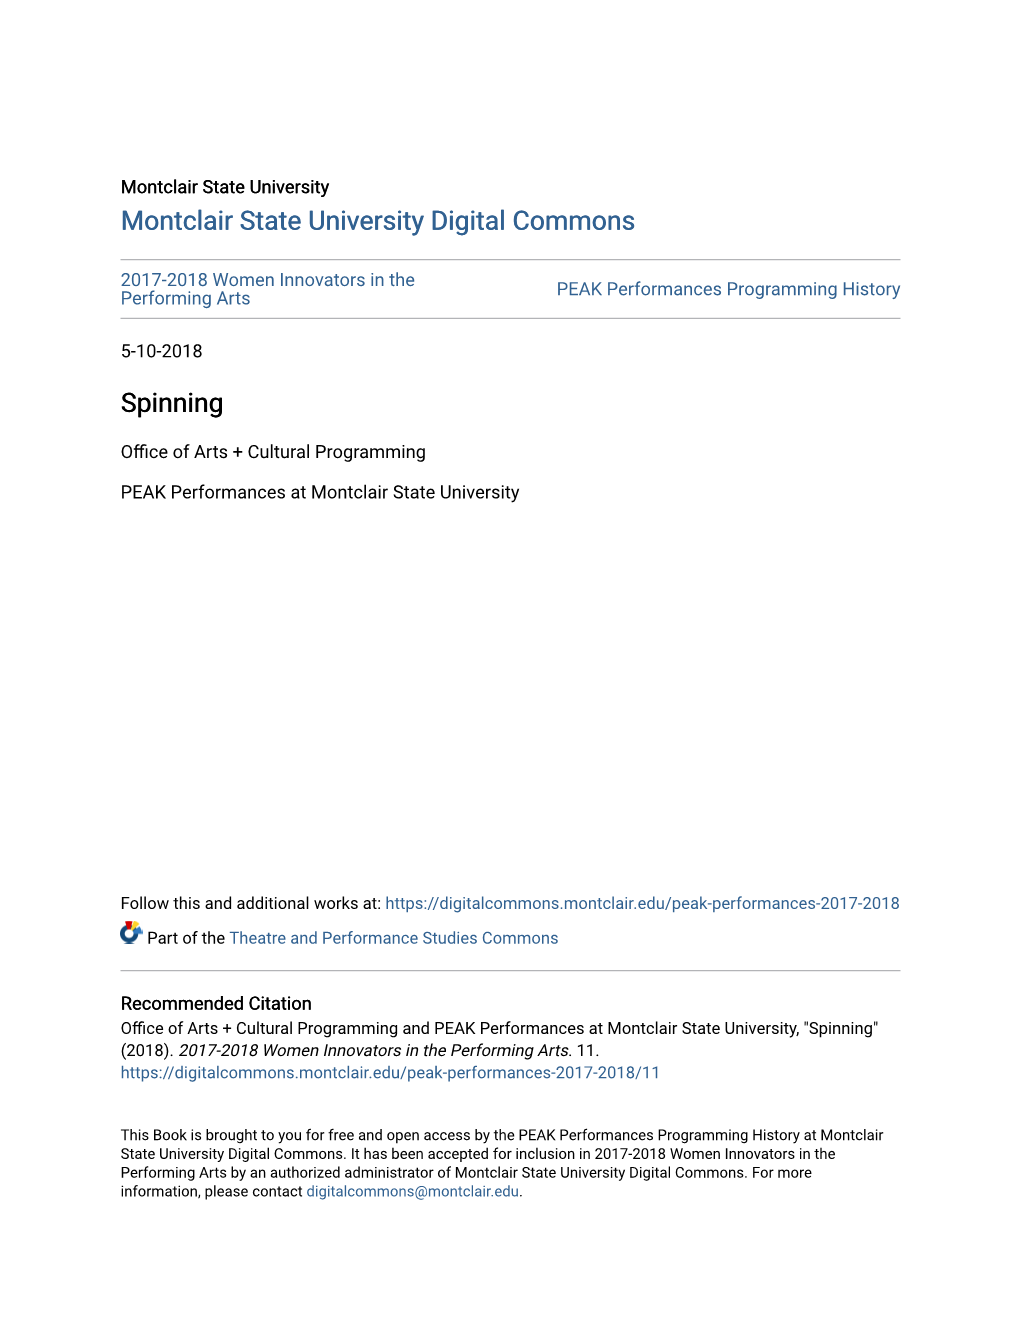 Montclair State University Digital Commons Spinning